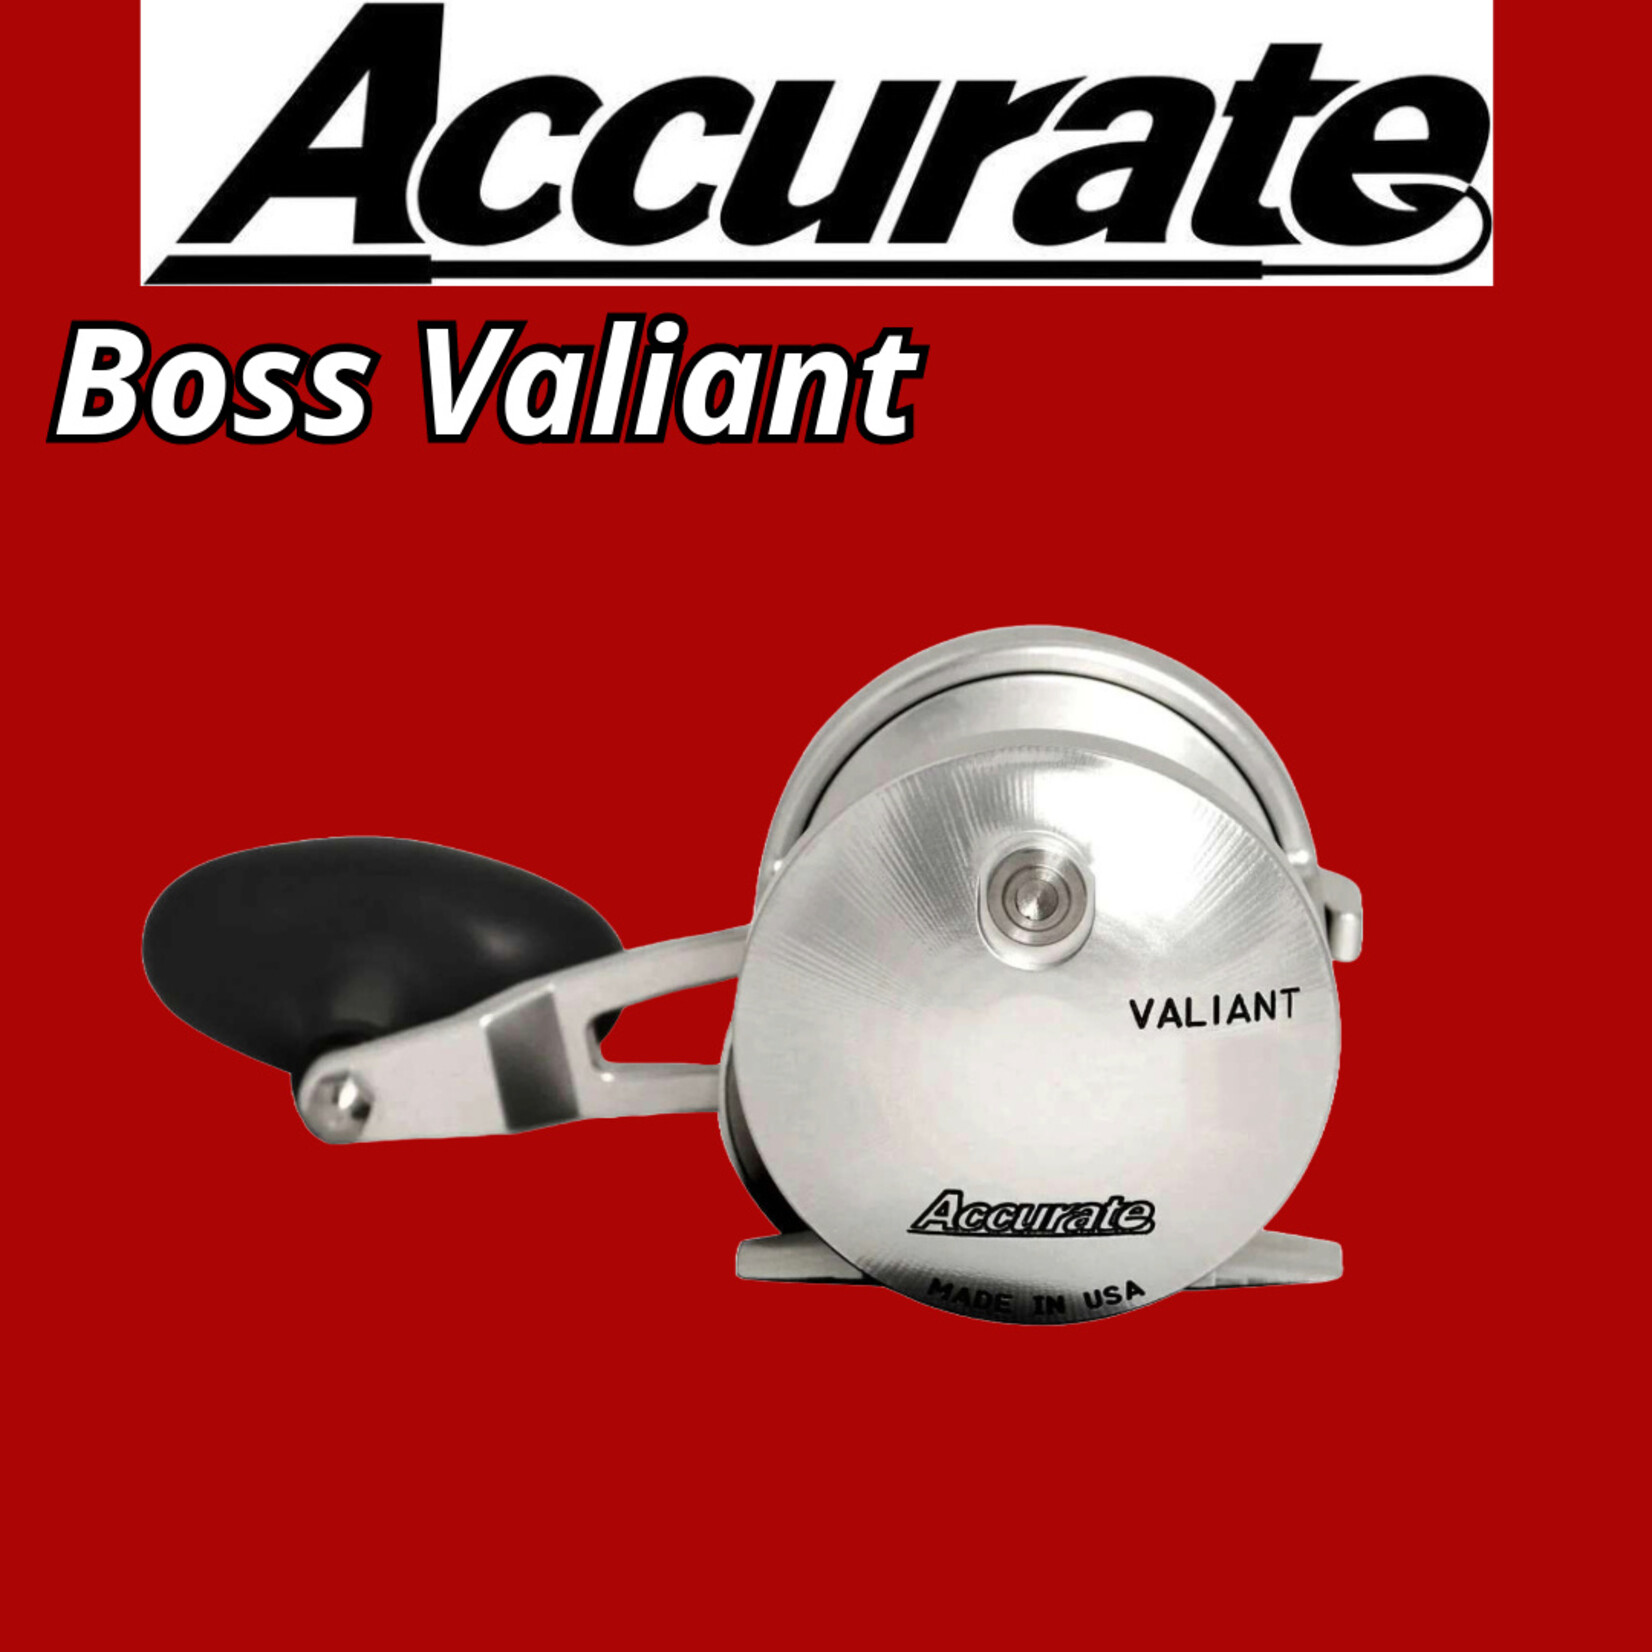 Accurate Boss Valiant